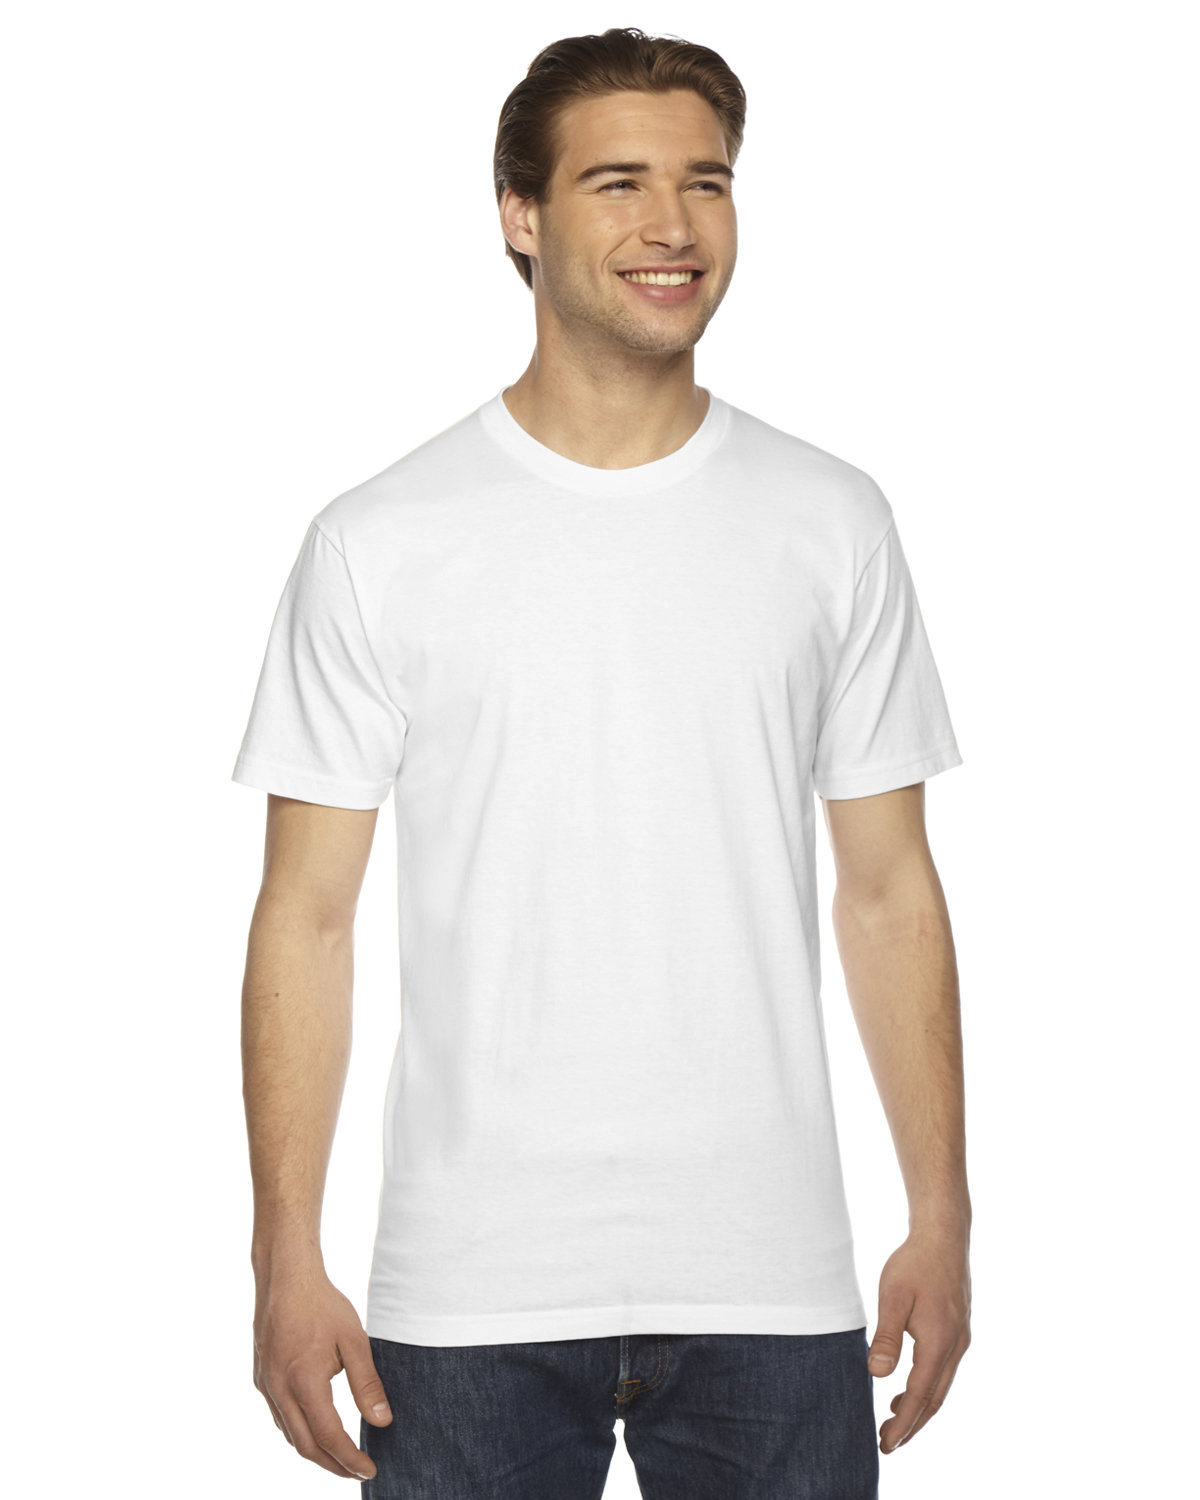 American Apparel Unisex Fine Jersey USA Made T-Shirt white 